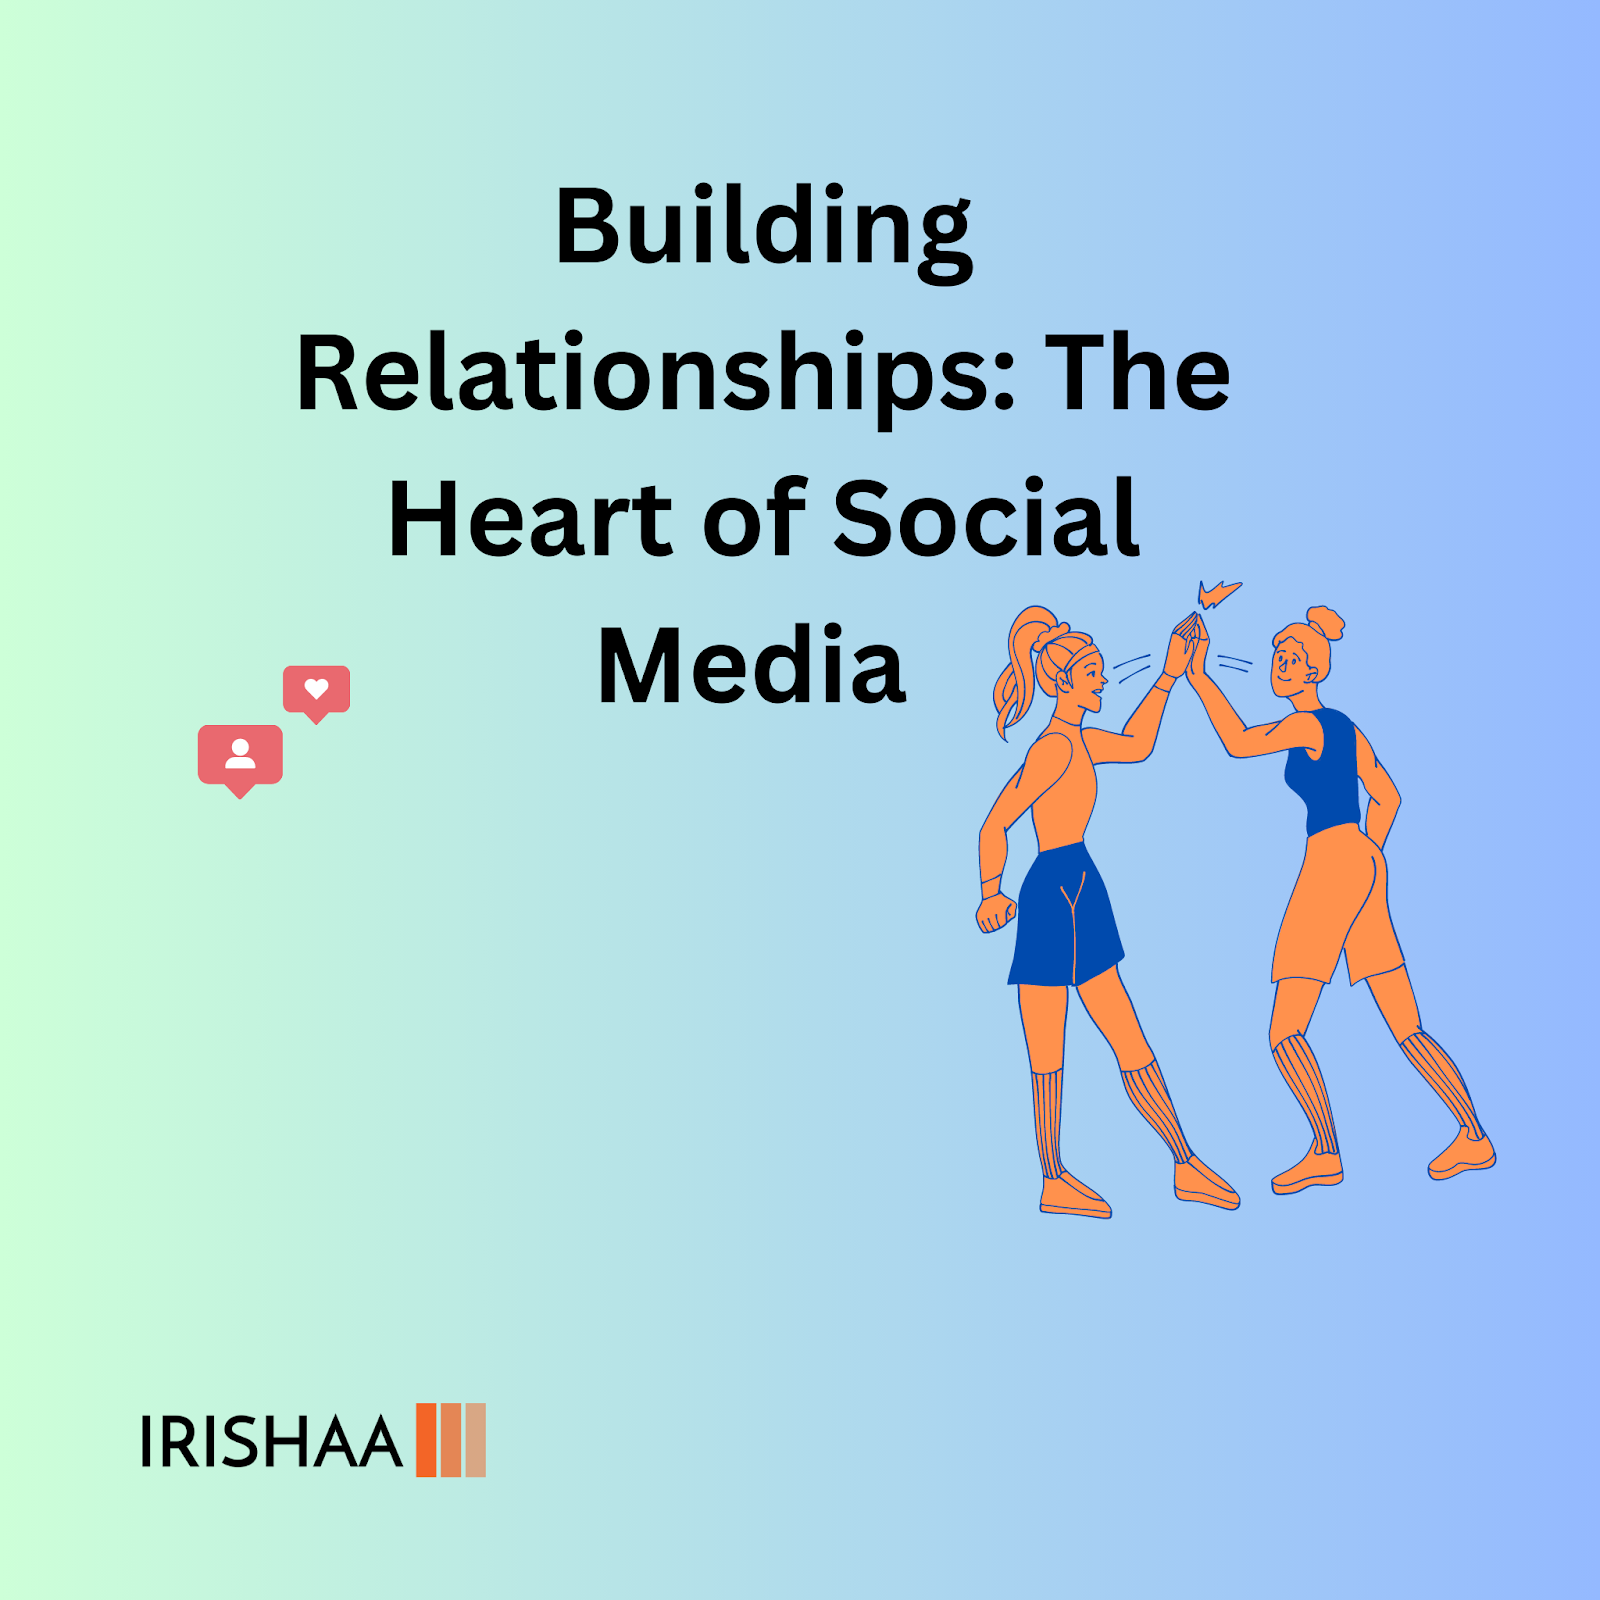 Building Relationships: The Heart of Social Media 

